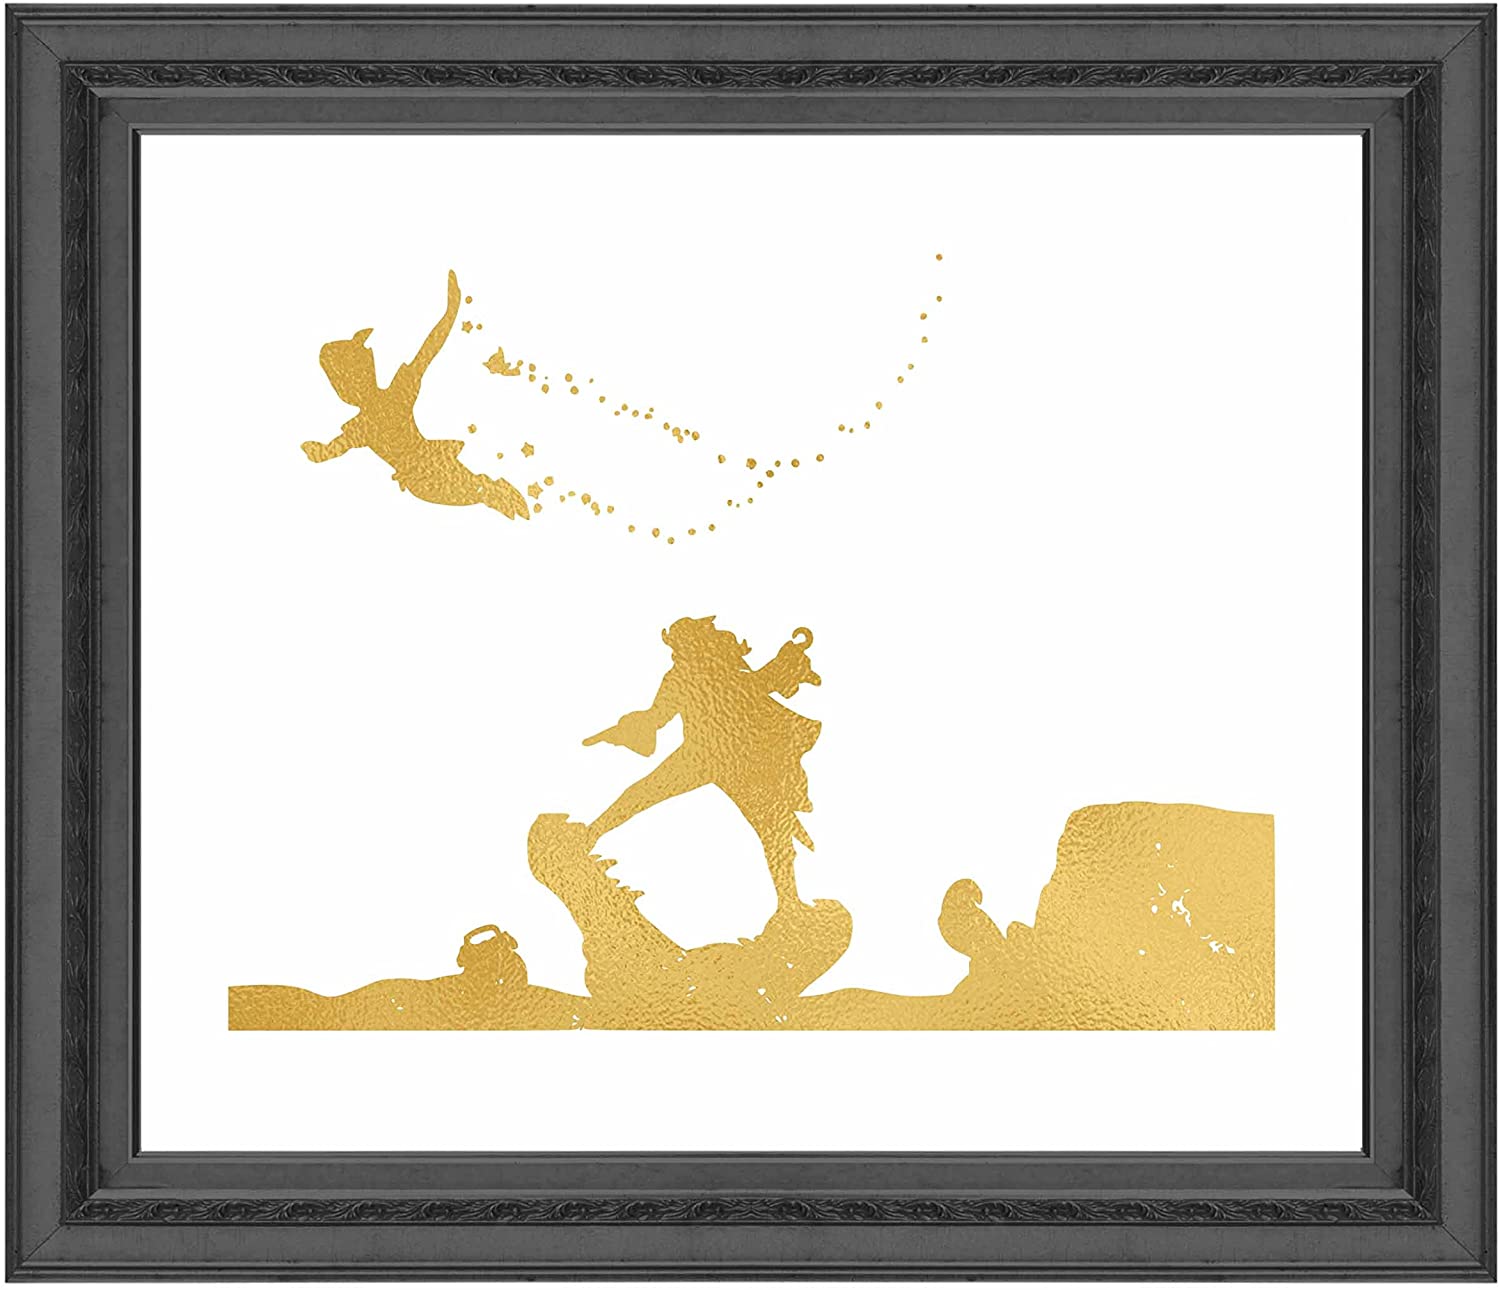 Store Udvidelse dør spejl Gold Print Inspired by Peter Pan and Captain Hook - Gold Poster Print –  Simply Remarkable